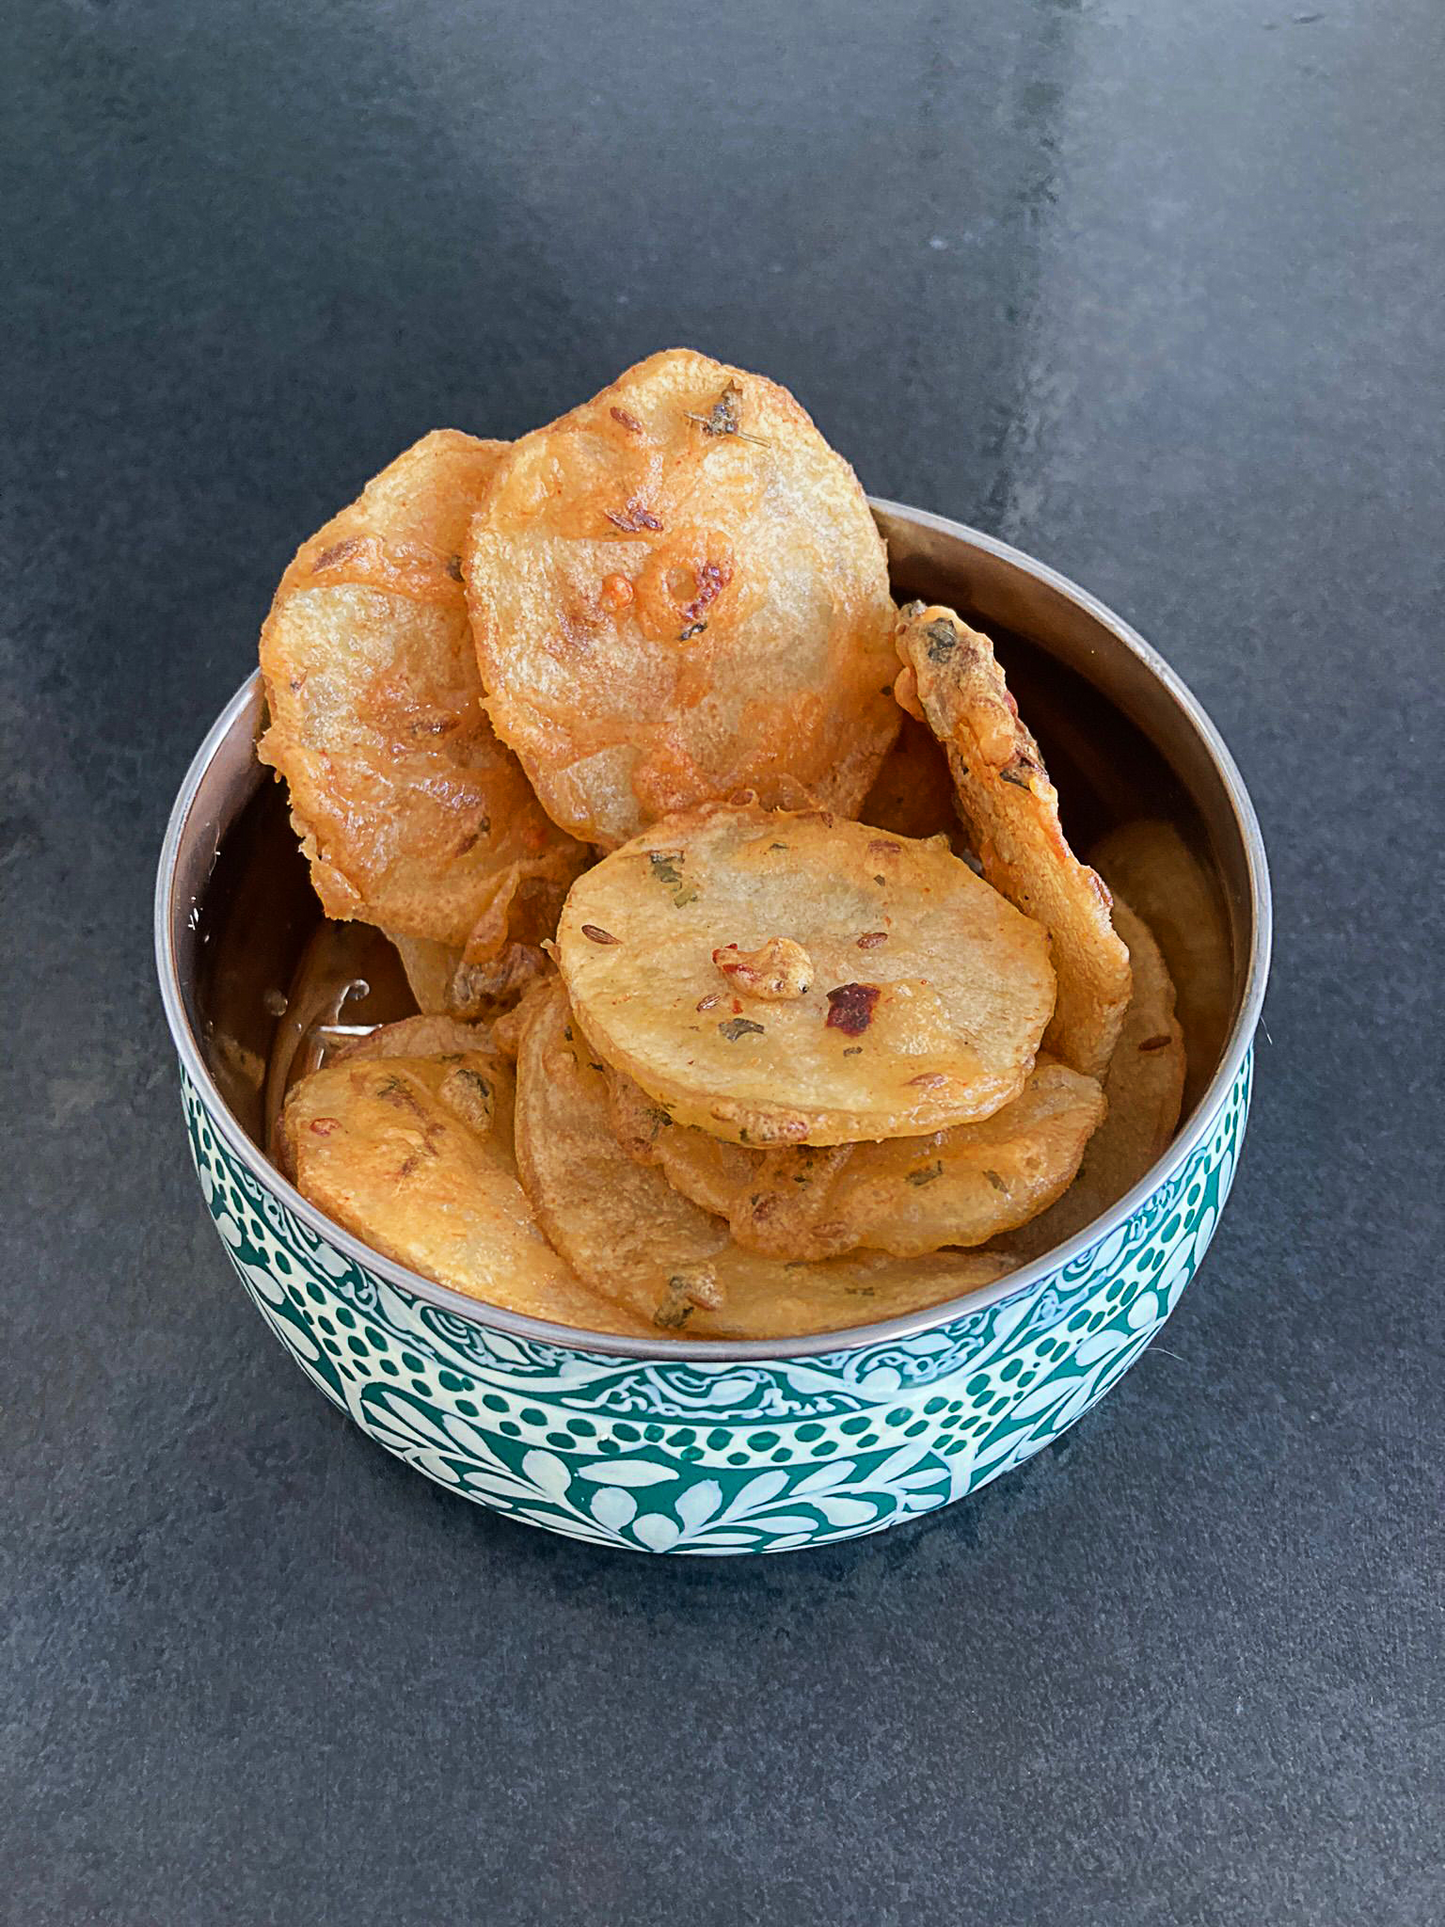 Photo of crispy potato bhajia in a blue bowl